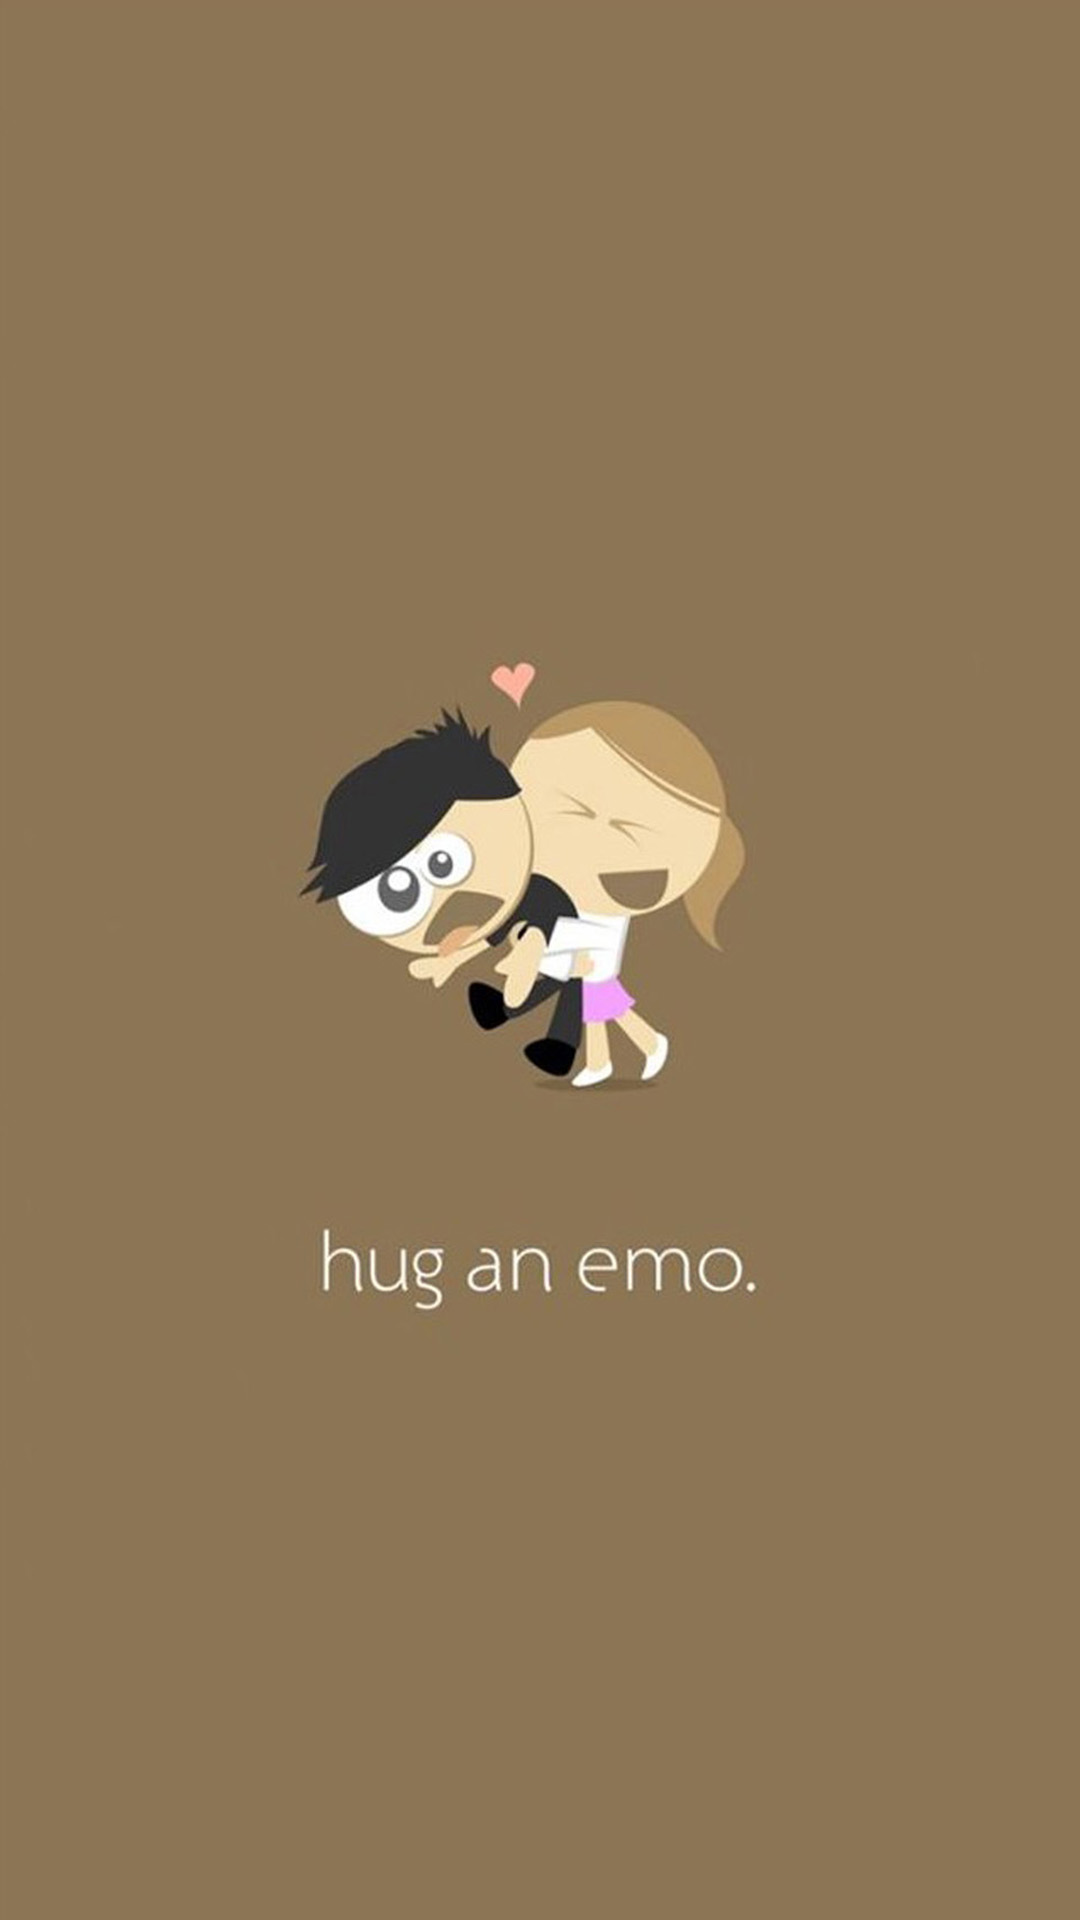 hug an emo | iPhone Wallpapers